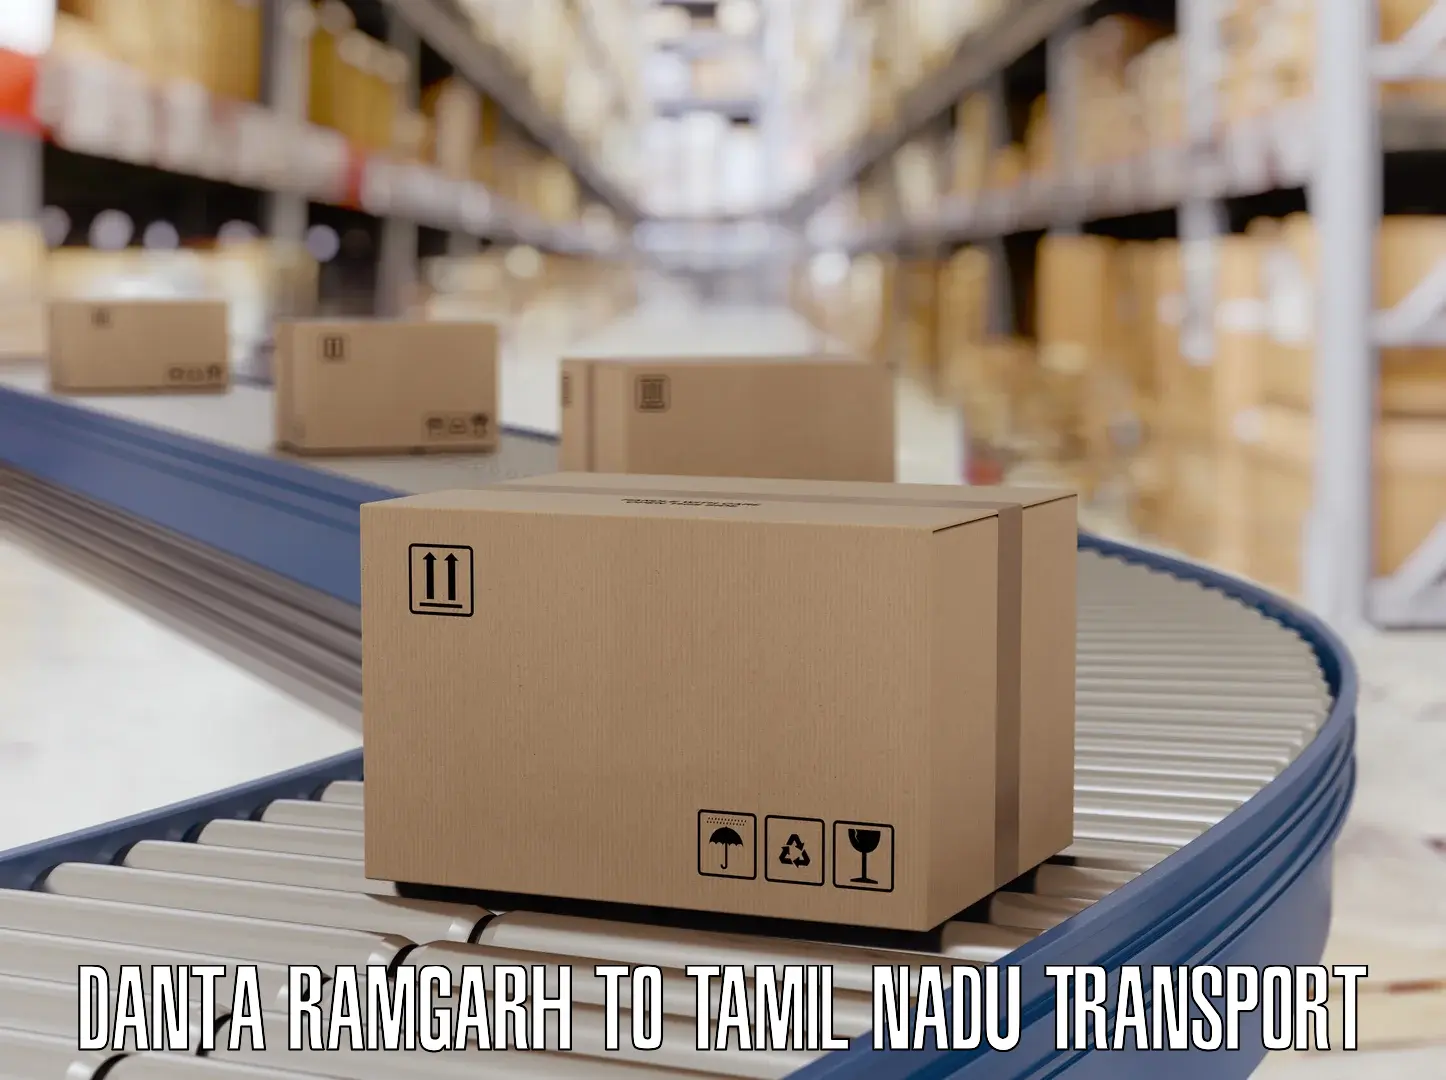 Delivery service Danta Ramgarh to Denkanikottai